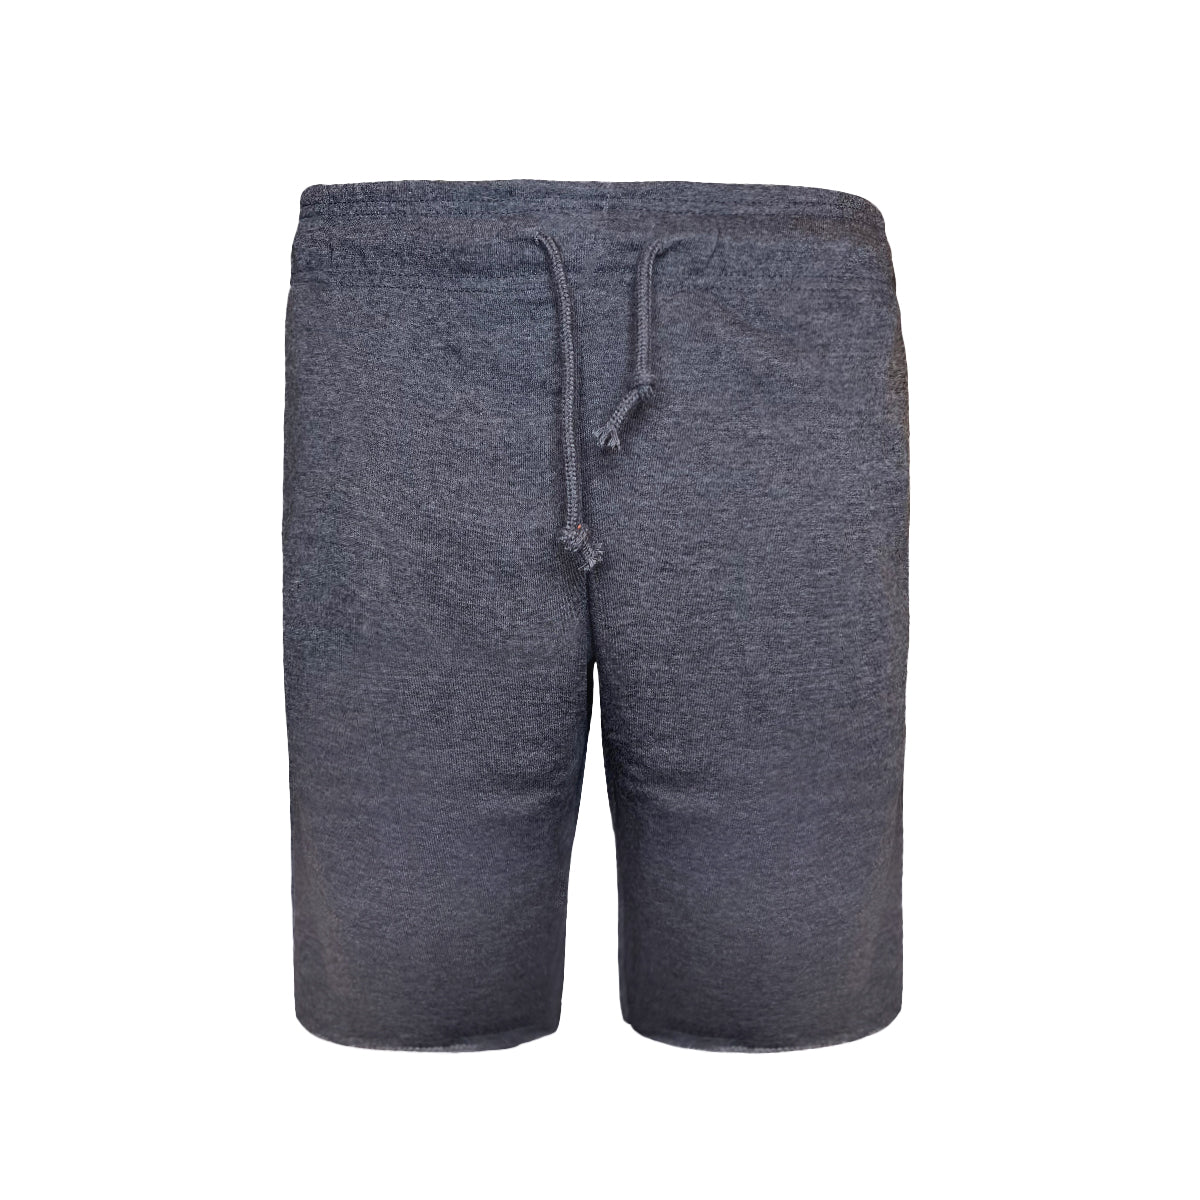 6030 - Adult Smart Shorts